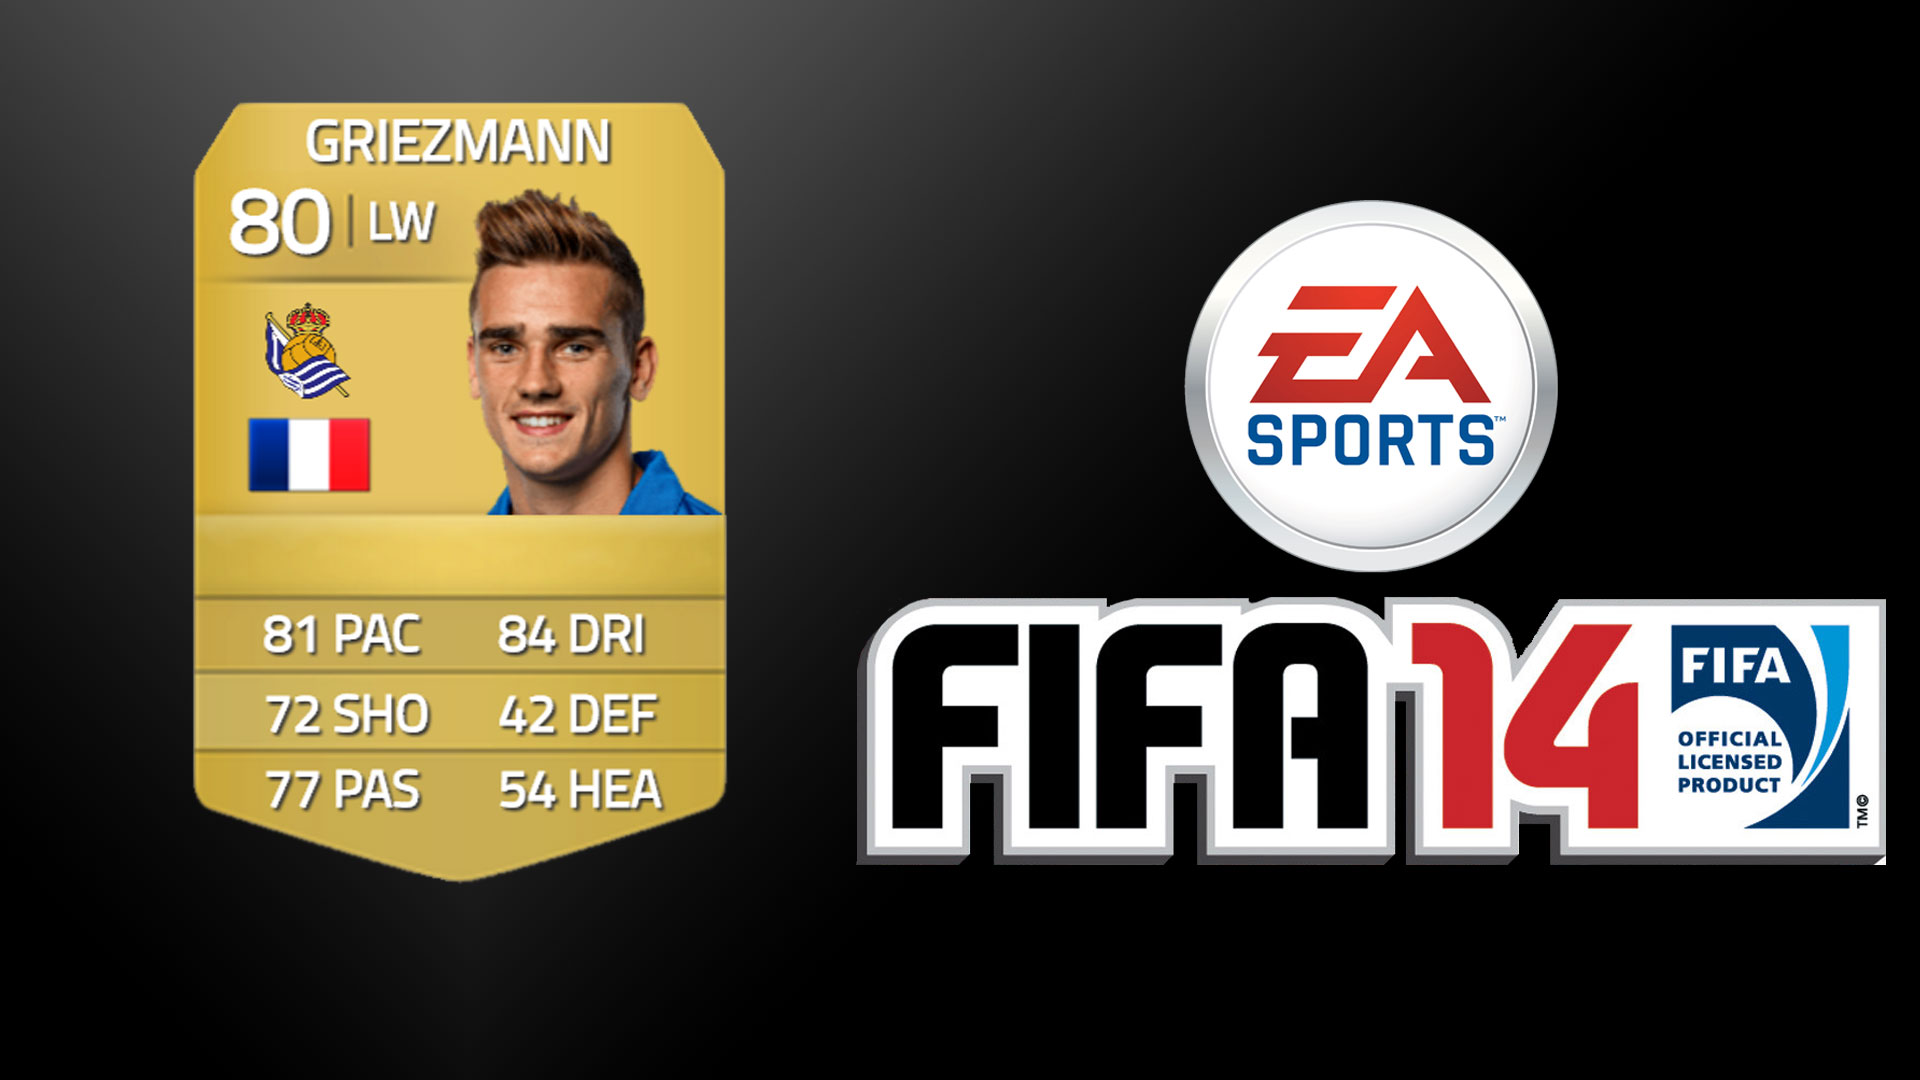 FIFA 14 Griezmann - Goal.com